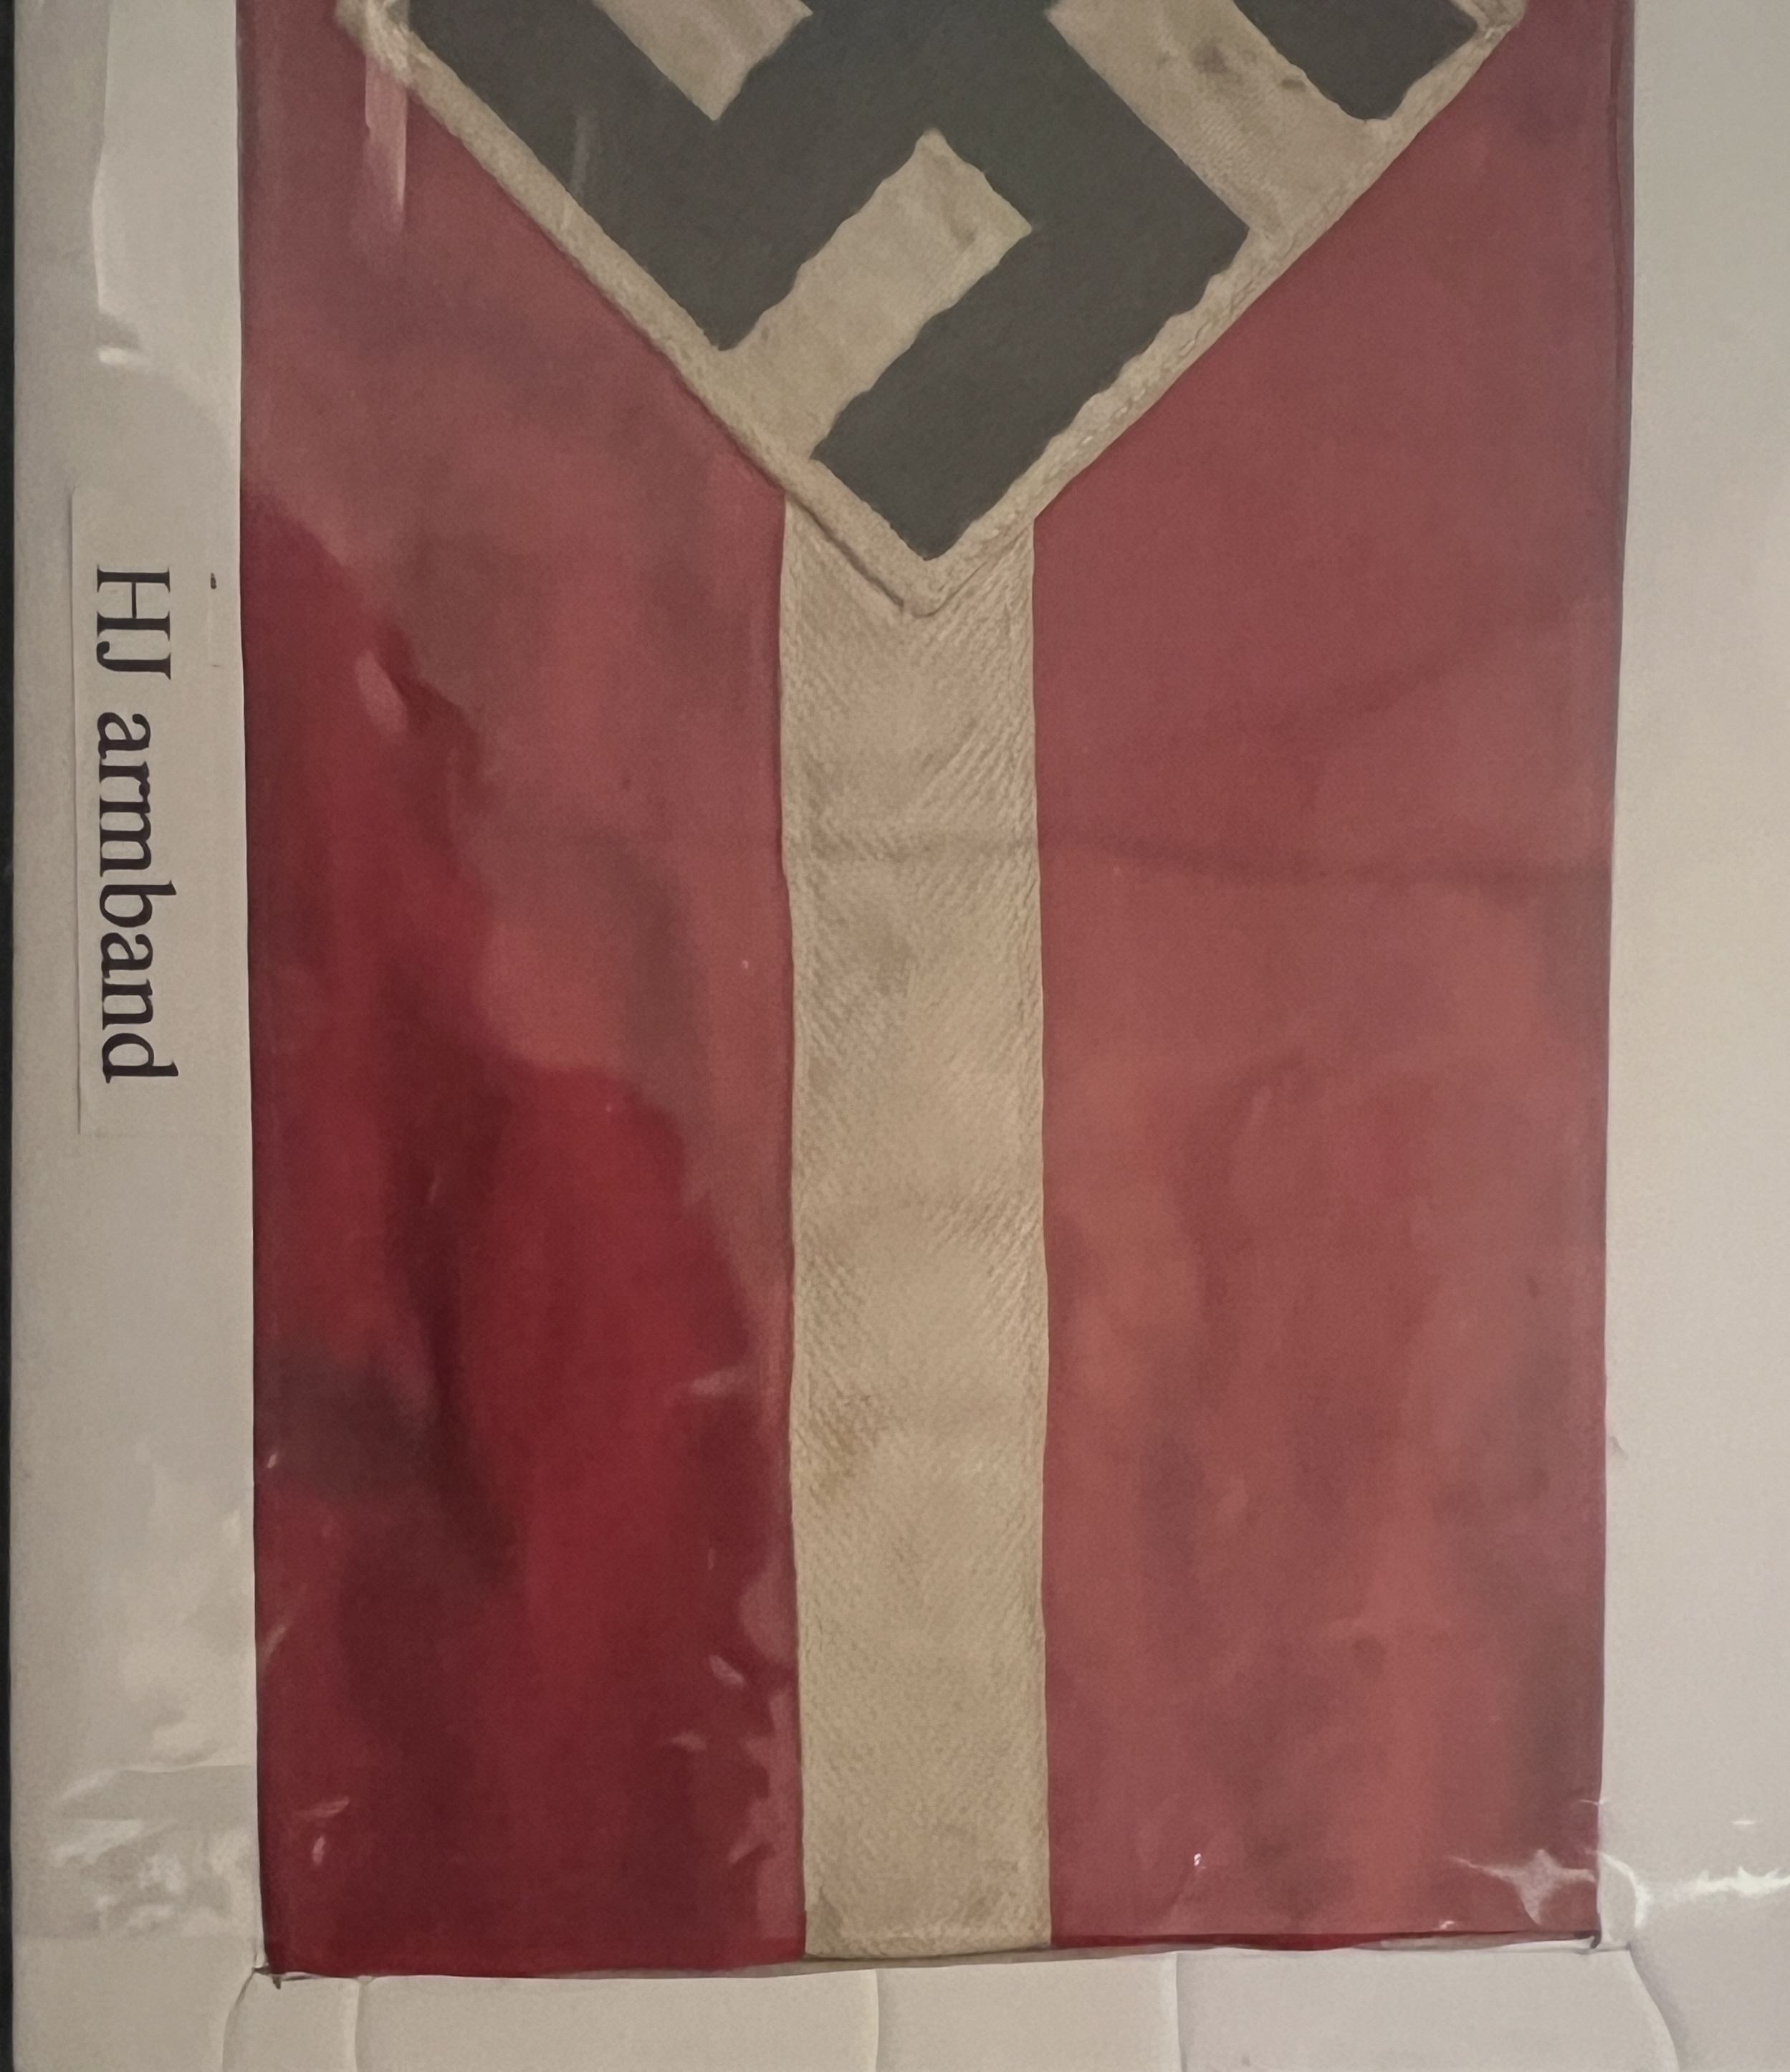 sttriking bold design, black swastika within white diamond, a central white horizontal border either side upon red band